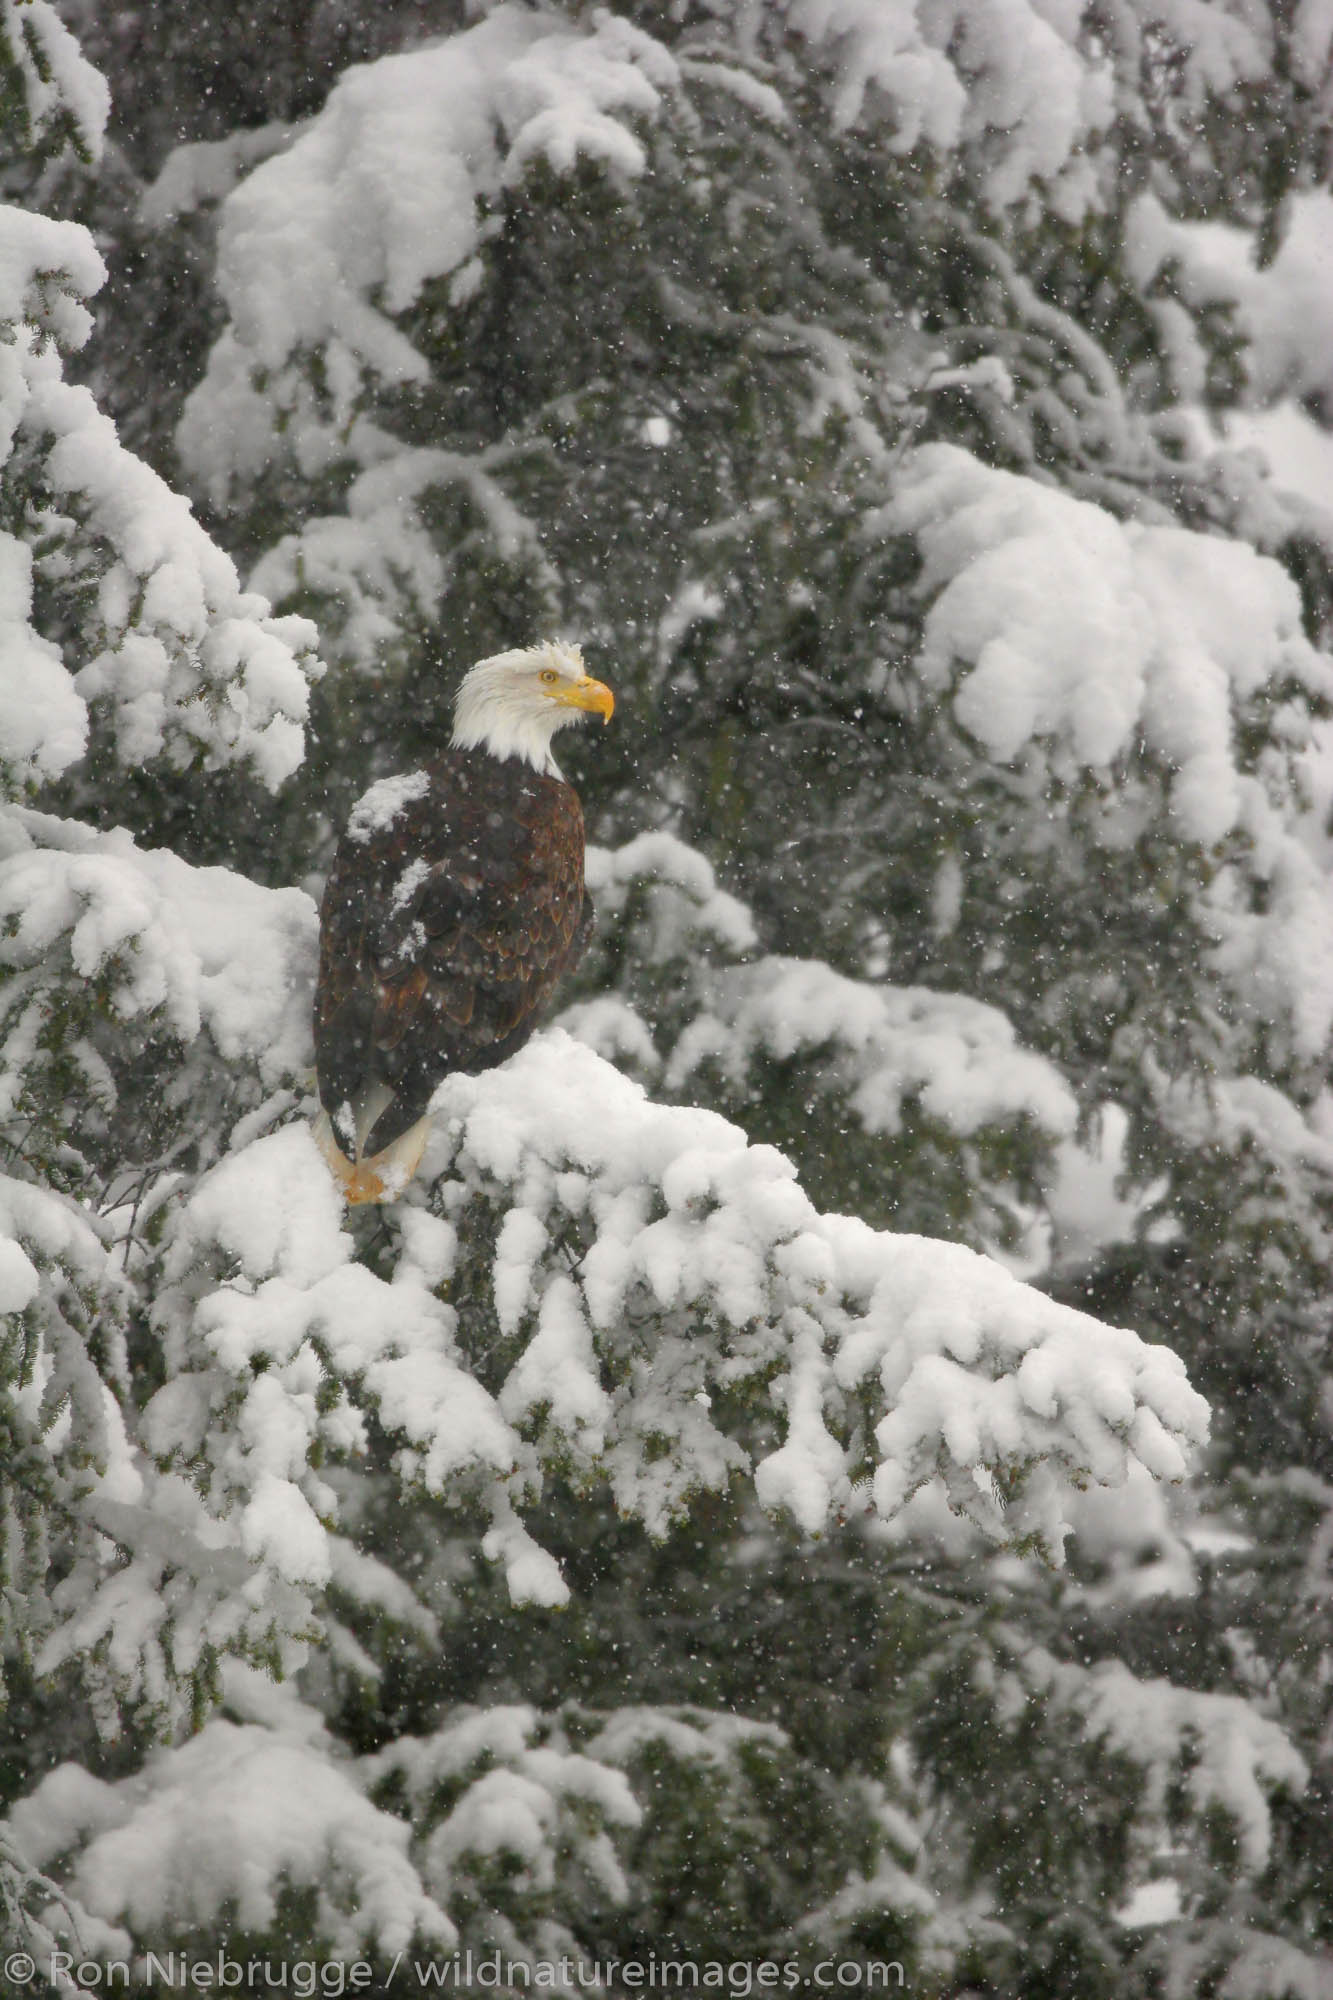 A Bald Eagle in winter, Chugach National Forest, Alaska